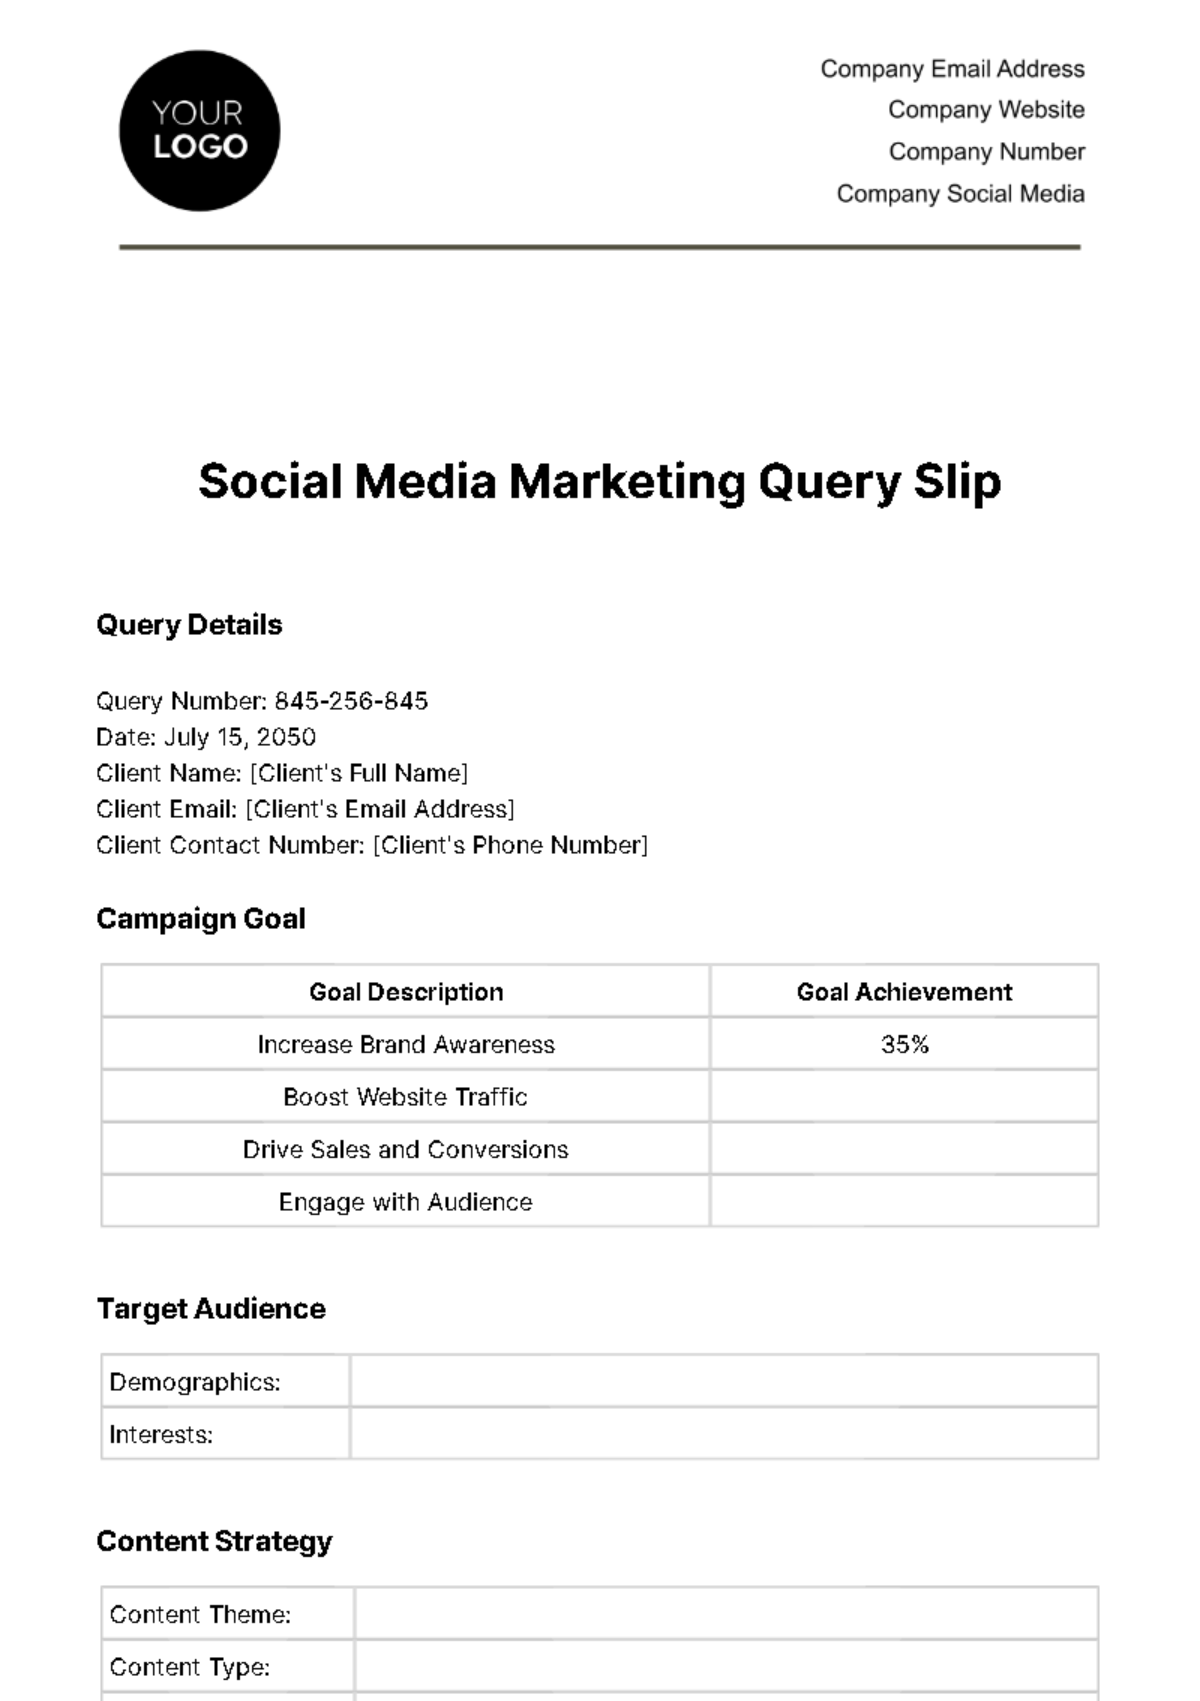 Free Social Media Marketing Query Slip Template